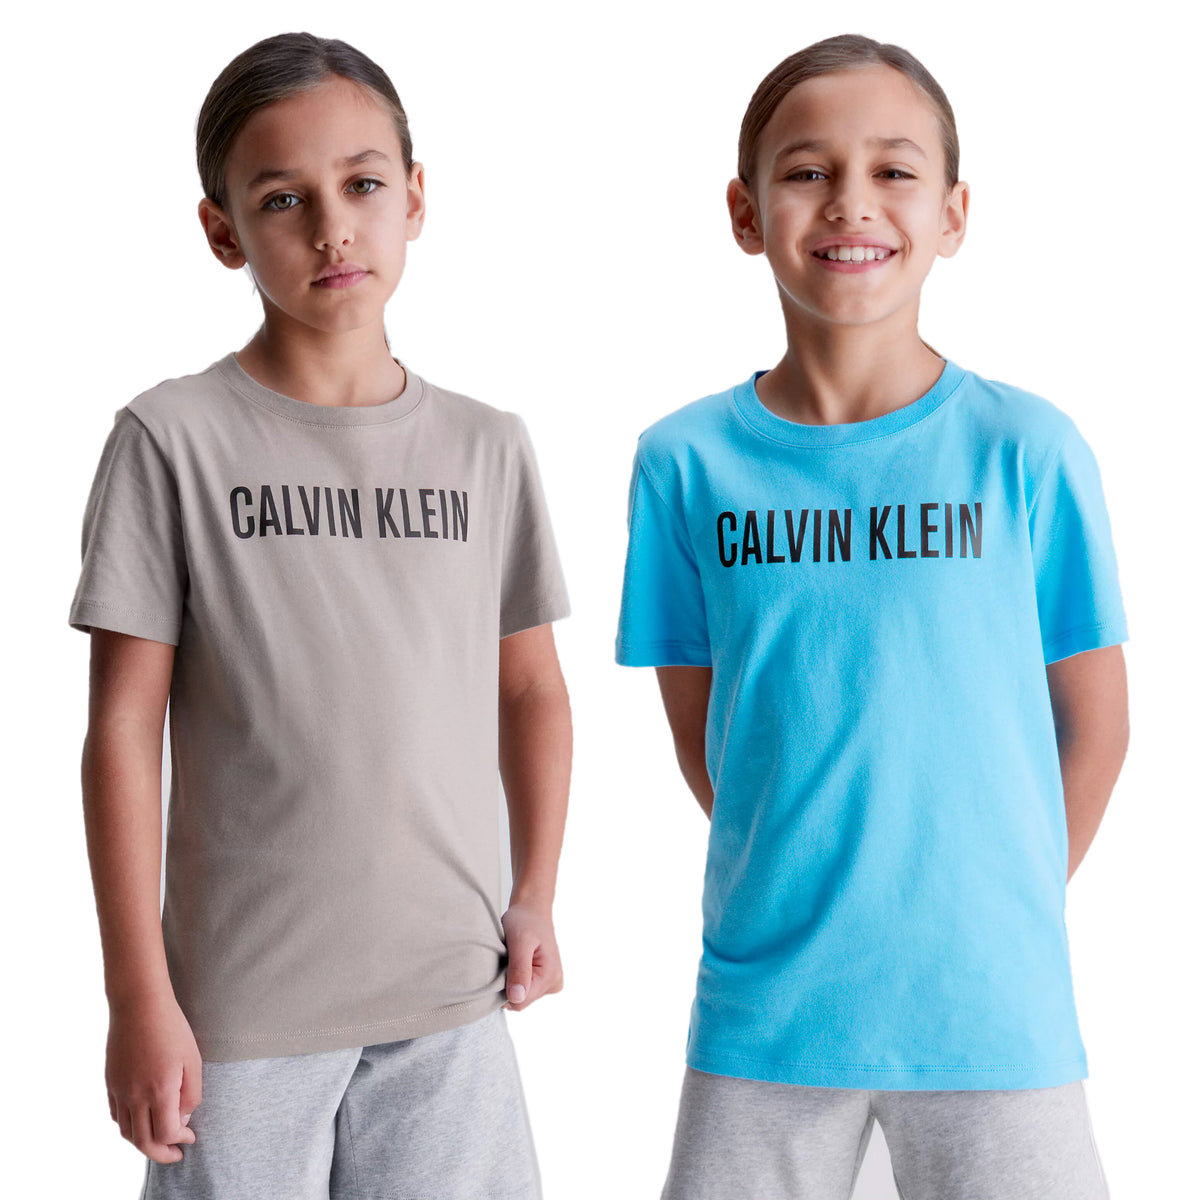 Calvin Klein Boys Intense Power T-Shirt - 2 Pack, 01, B70B700431, Pebblestone/ W/ Bluecrush